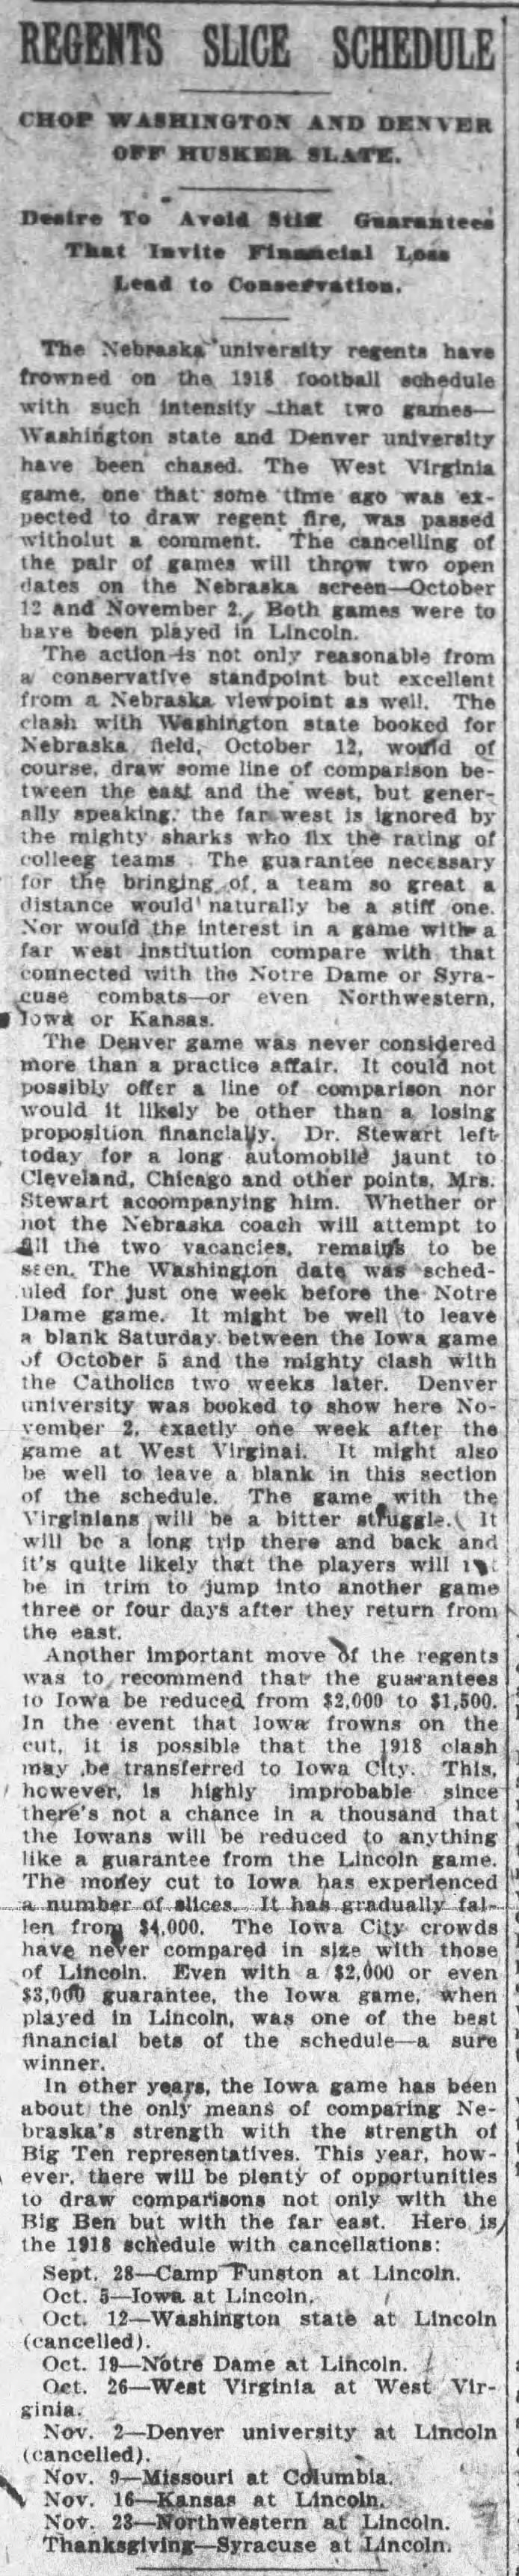 1918 Nebraska cancels home games with Washington State & Denver, financial reasons